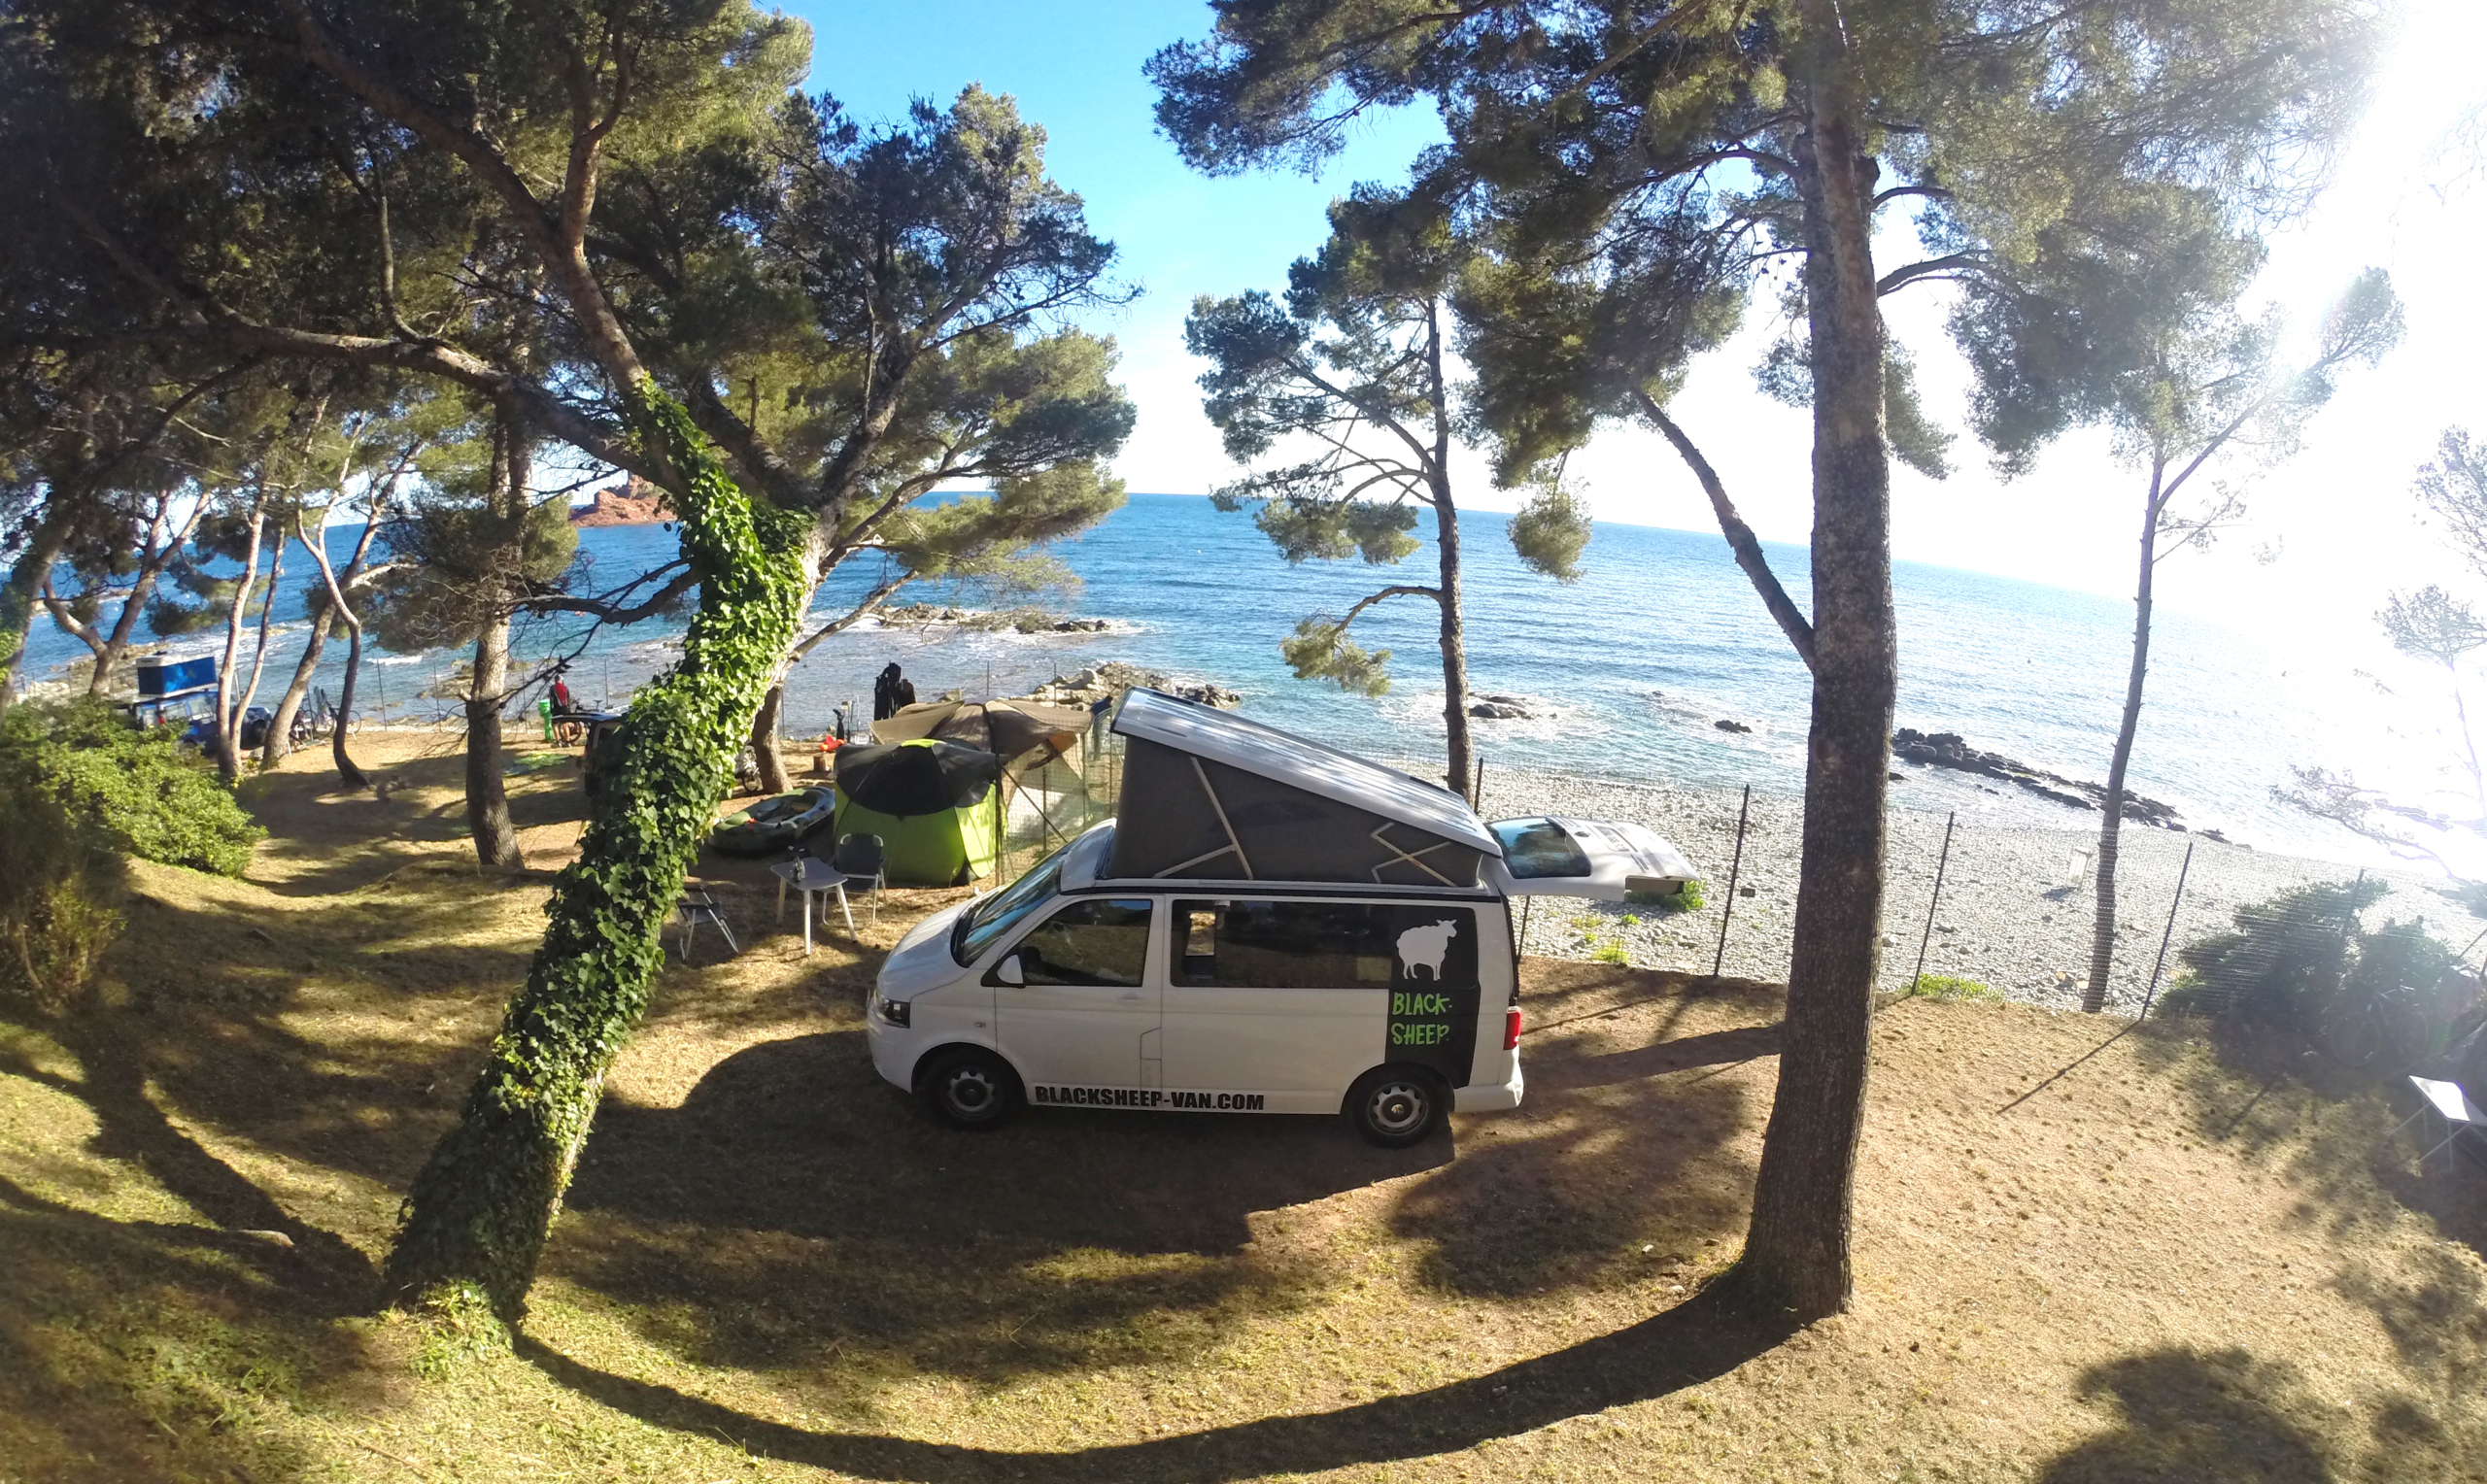 Road trip met kampeerbusjes langs de kust van Aquitaine